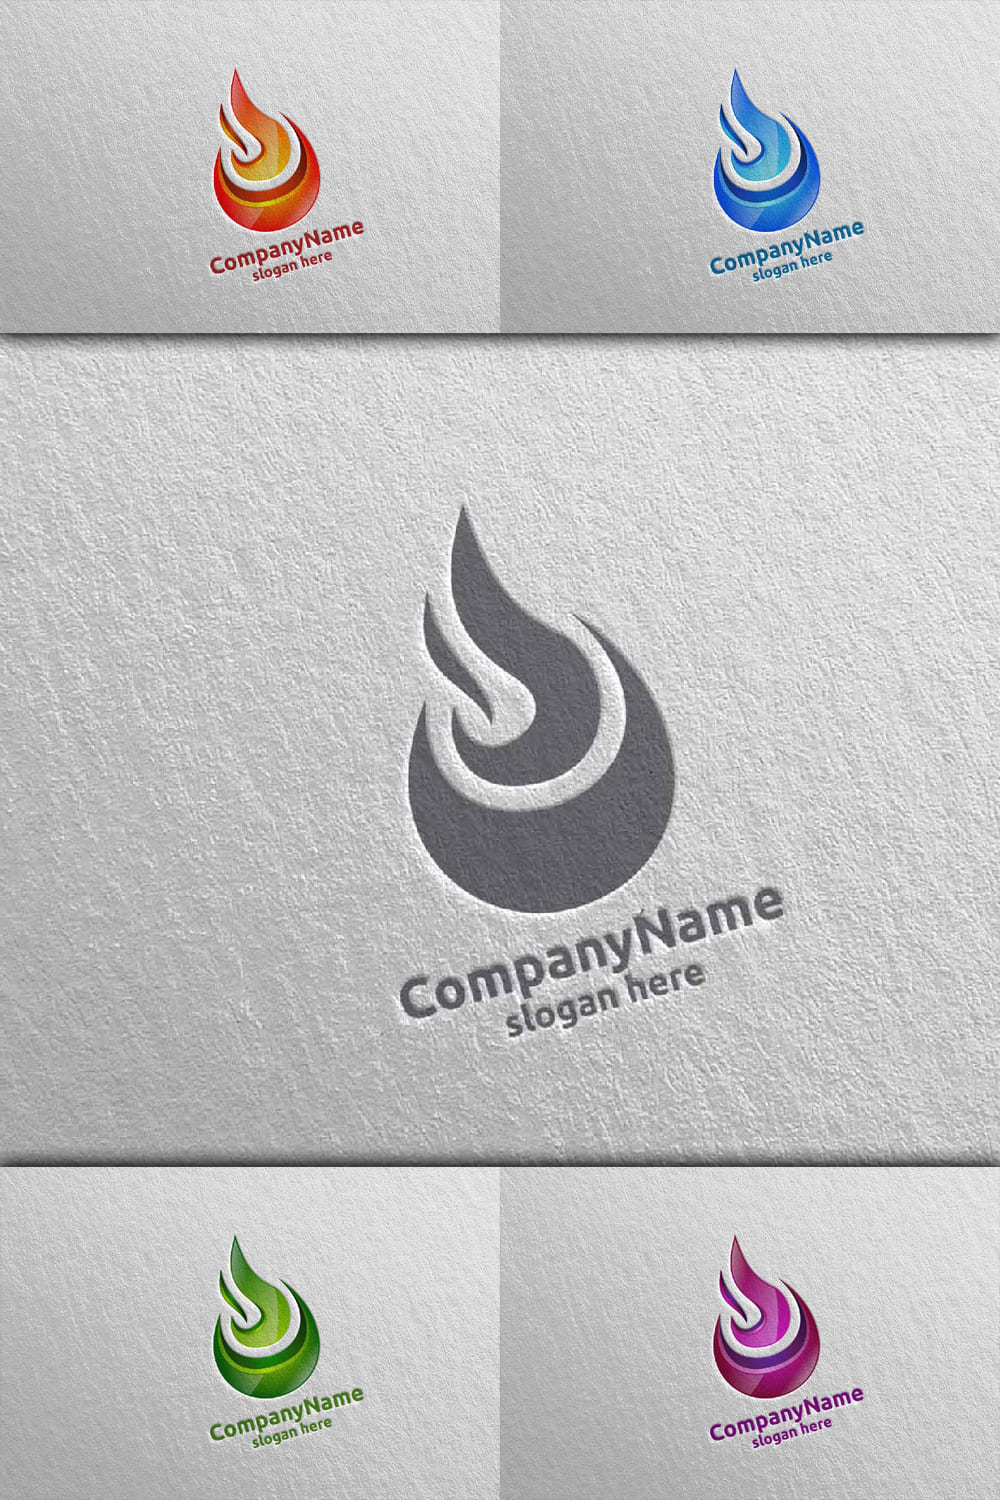 3D Fire Flame Element Logo Design - pinterest image preview.